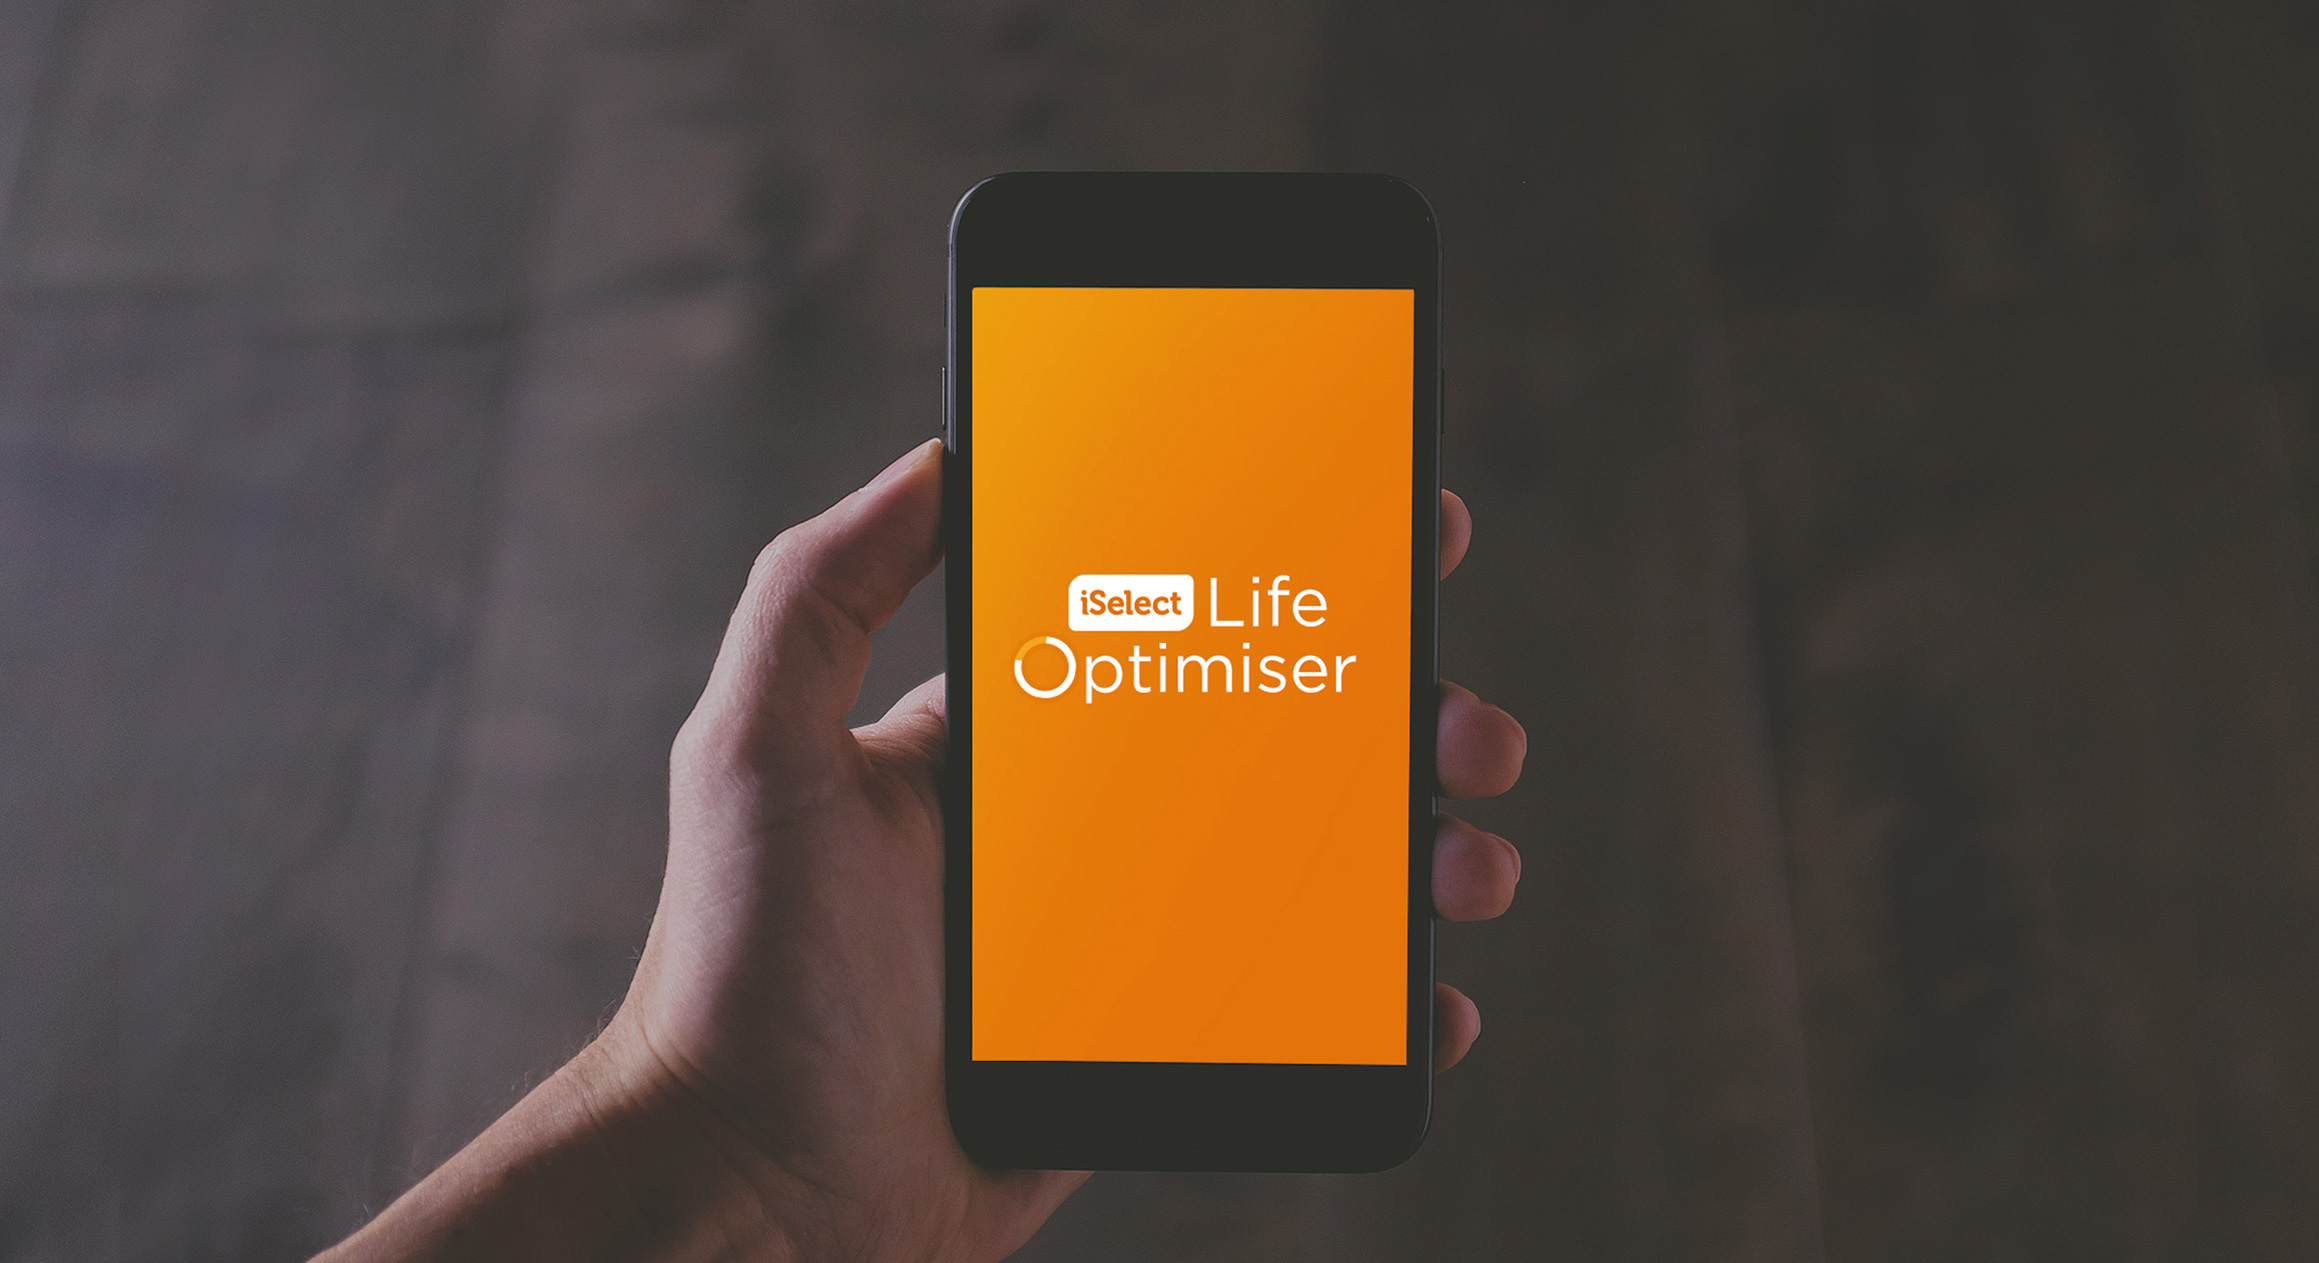 iSelect: Life Optimiser